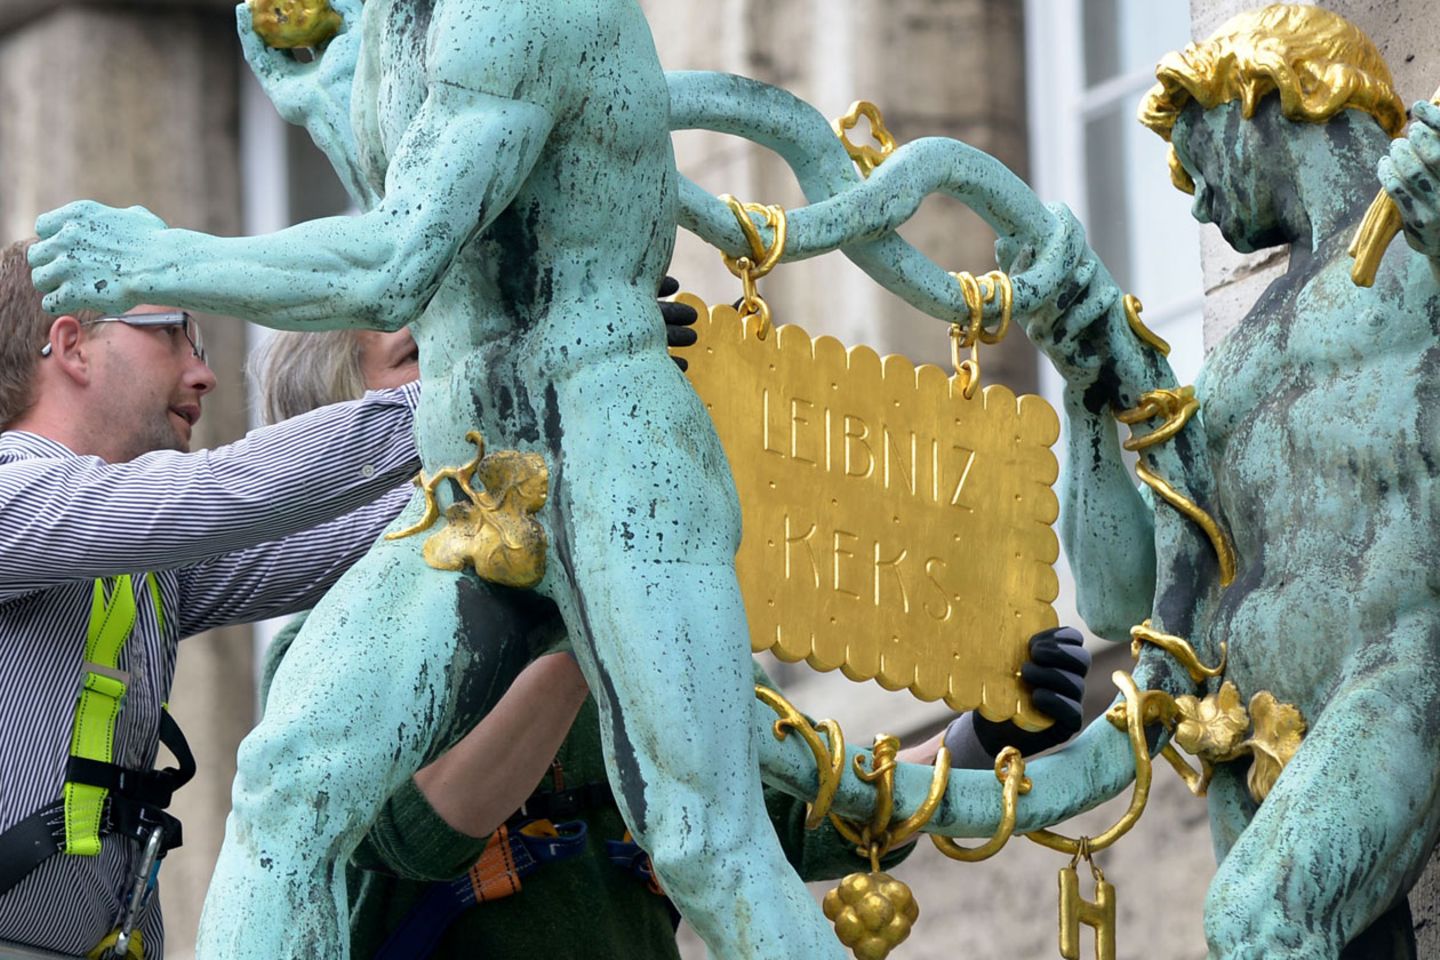 Zwei Mechaniker hängen den goldenen Keks wieder dorthin, wo er hingehört - ans Bahlsen-Firmengebäude in Hannover.